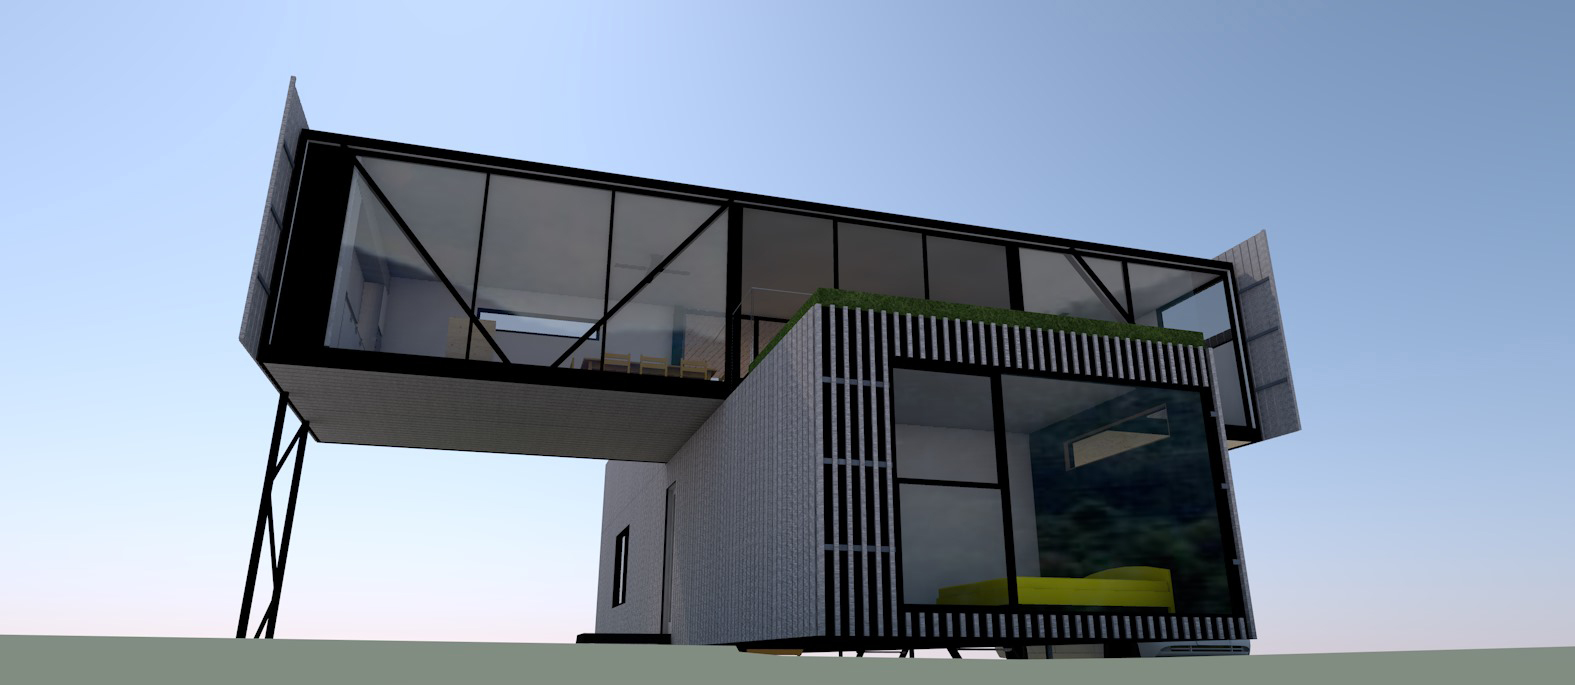 South Australia Modular House